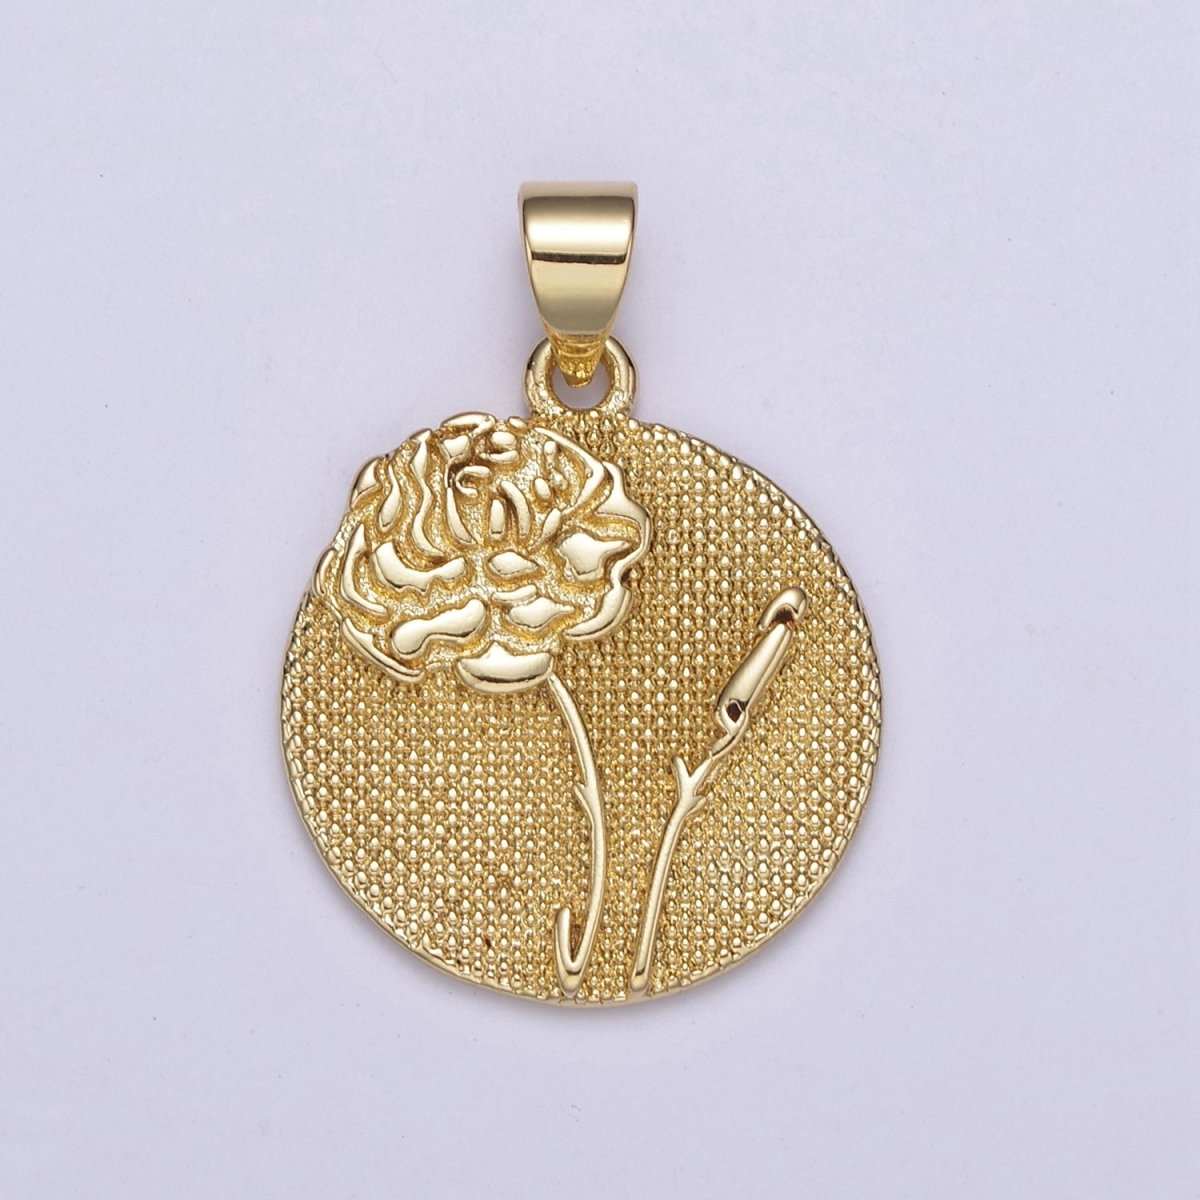 Wild Flower Collection Gold Rose Flower, Cotton Blossom, Sun Flower Dandelion Charm Medallion for Necklace Bracelet Supply H-070 H-079 H-087 H-093 H-095 H-099 - DLUXCA